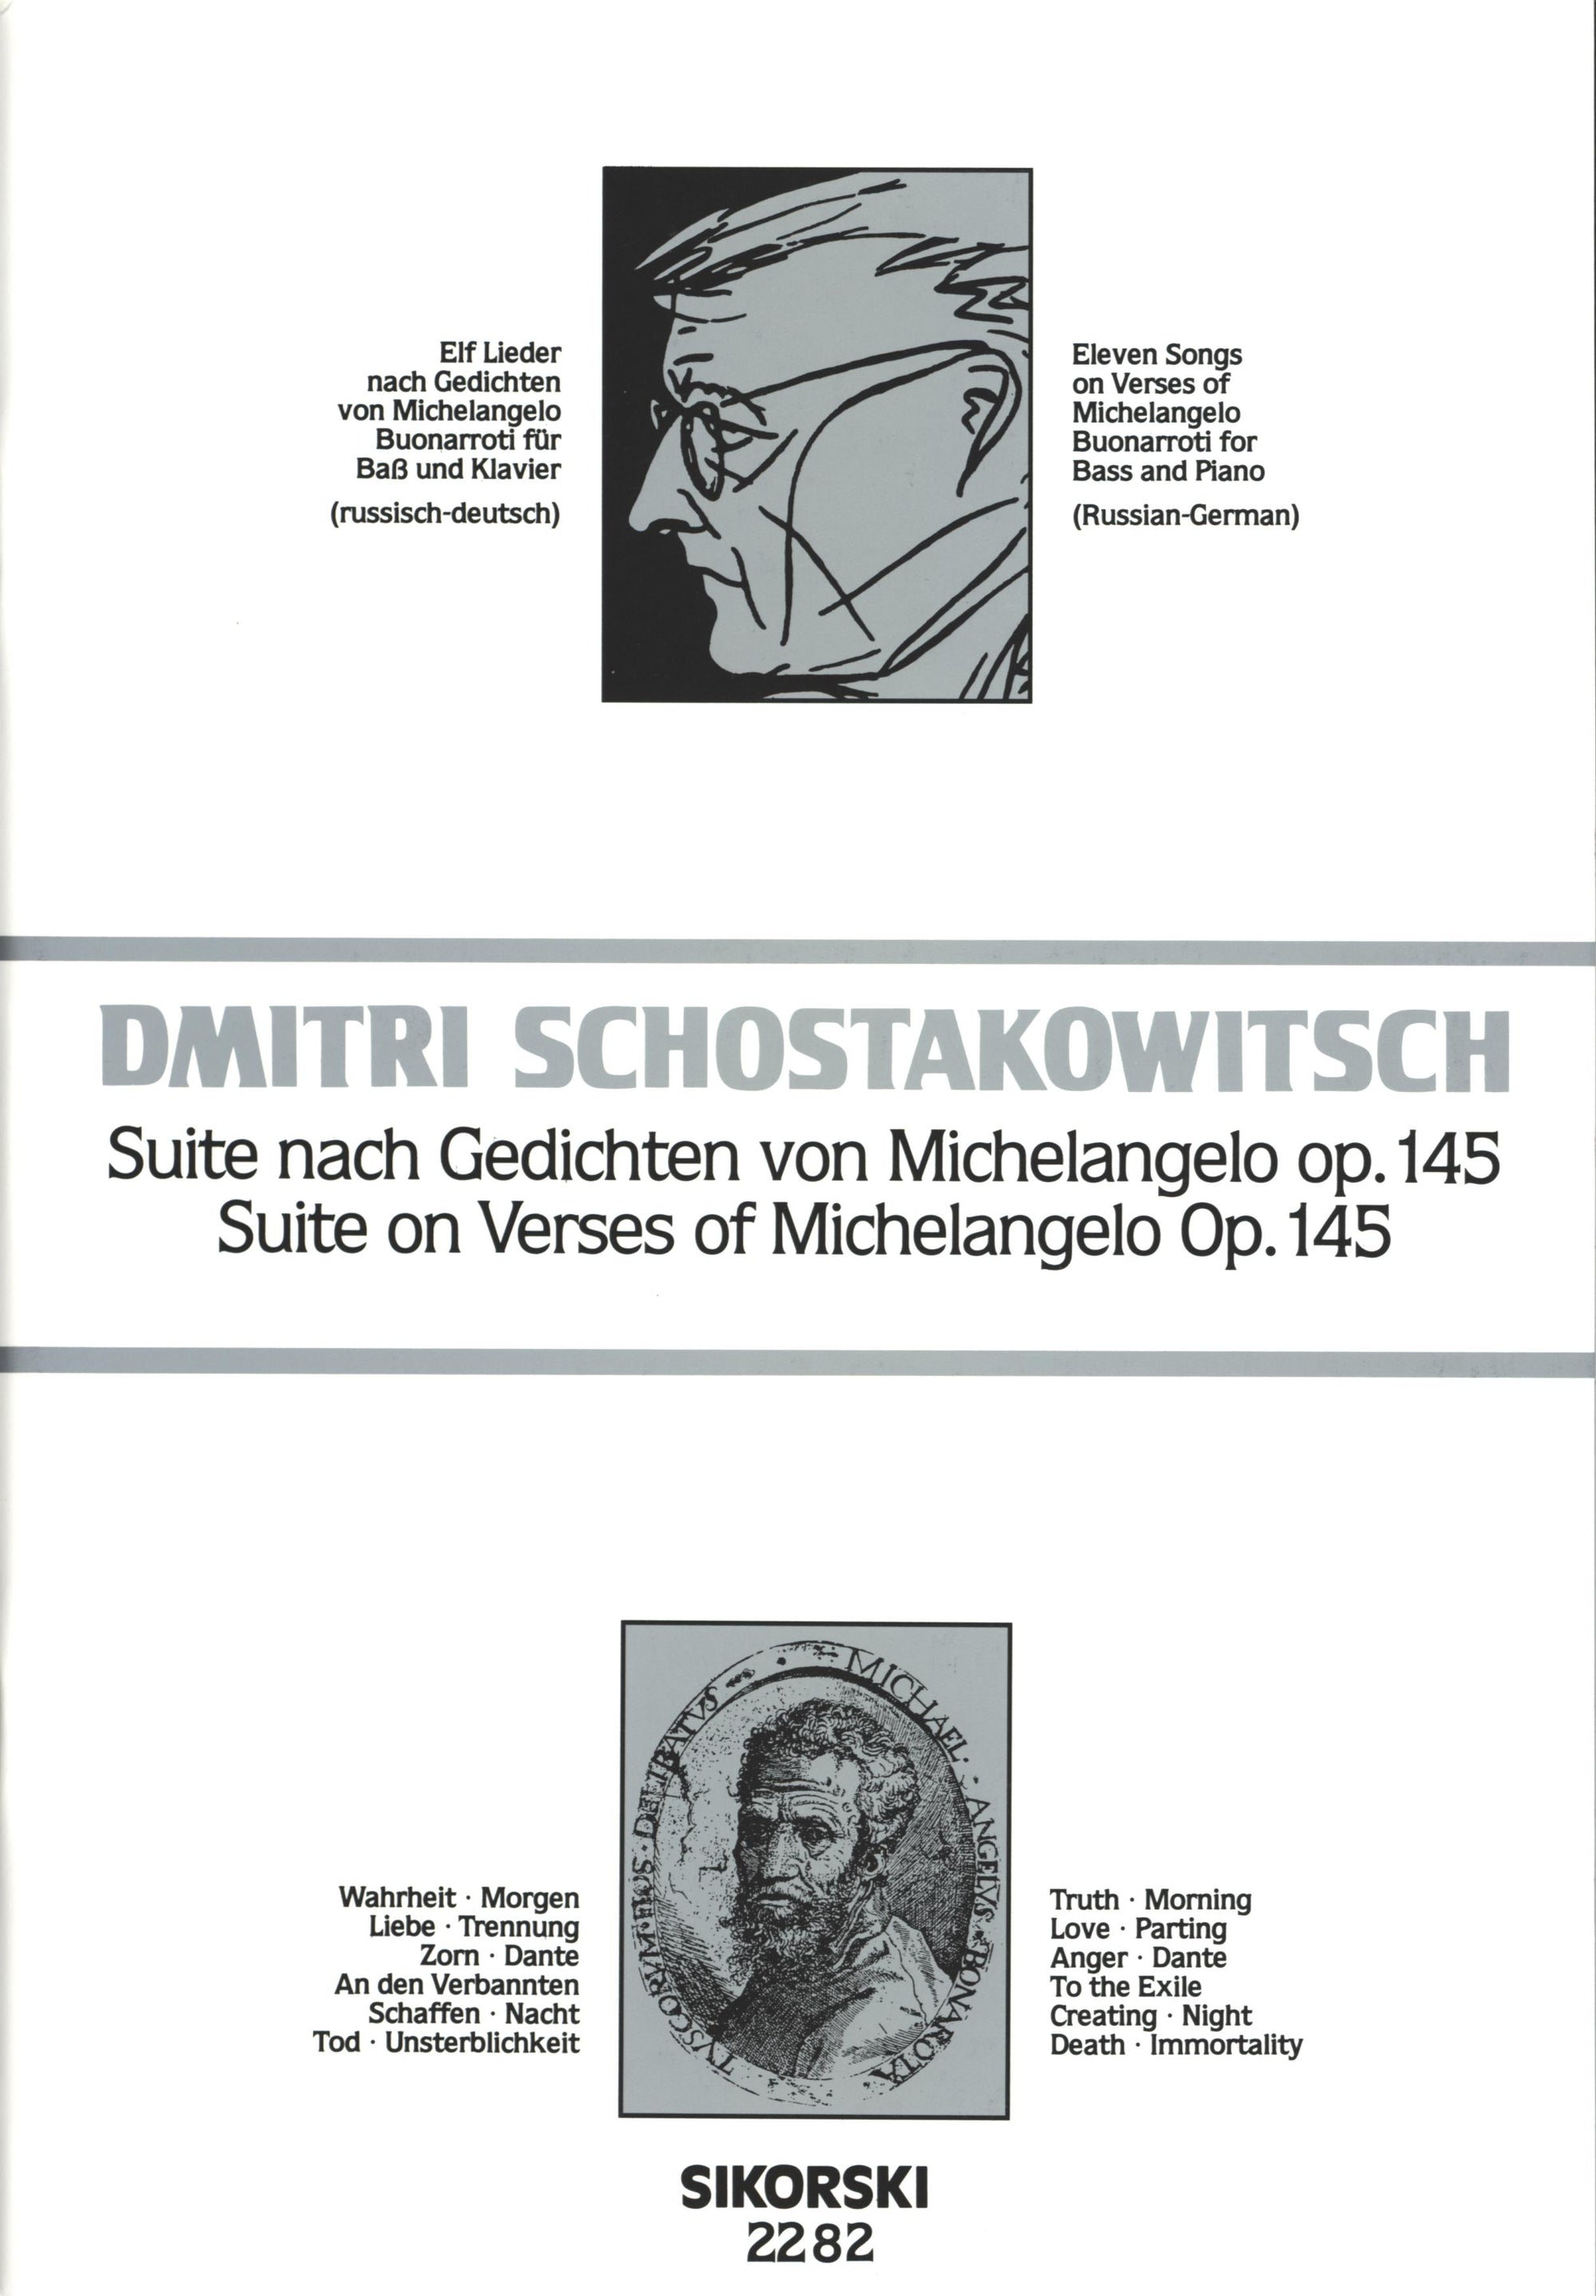 Shostakovich: Suite on Verses of Michelangelo Buonarroti, Op. 145